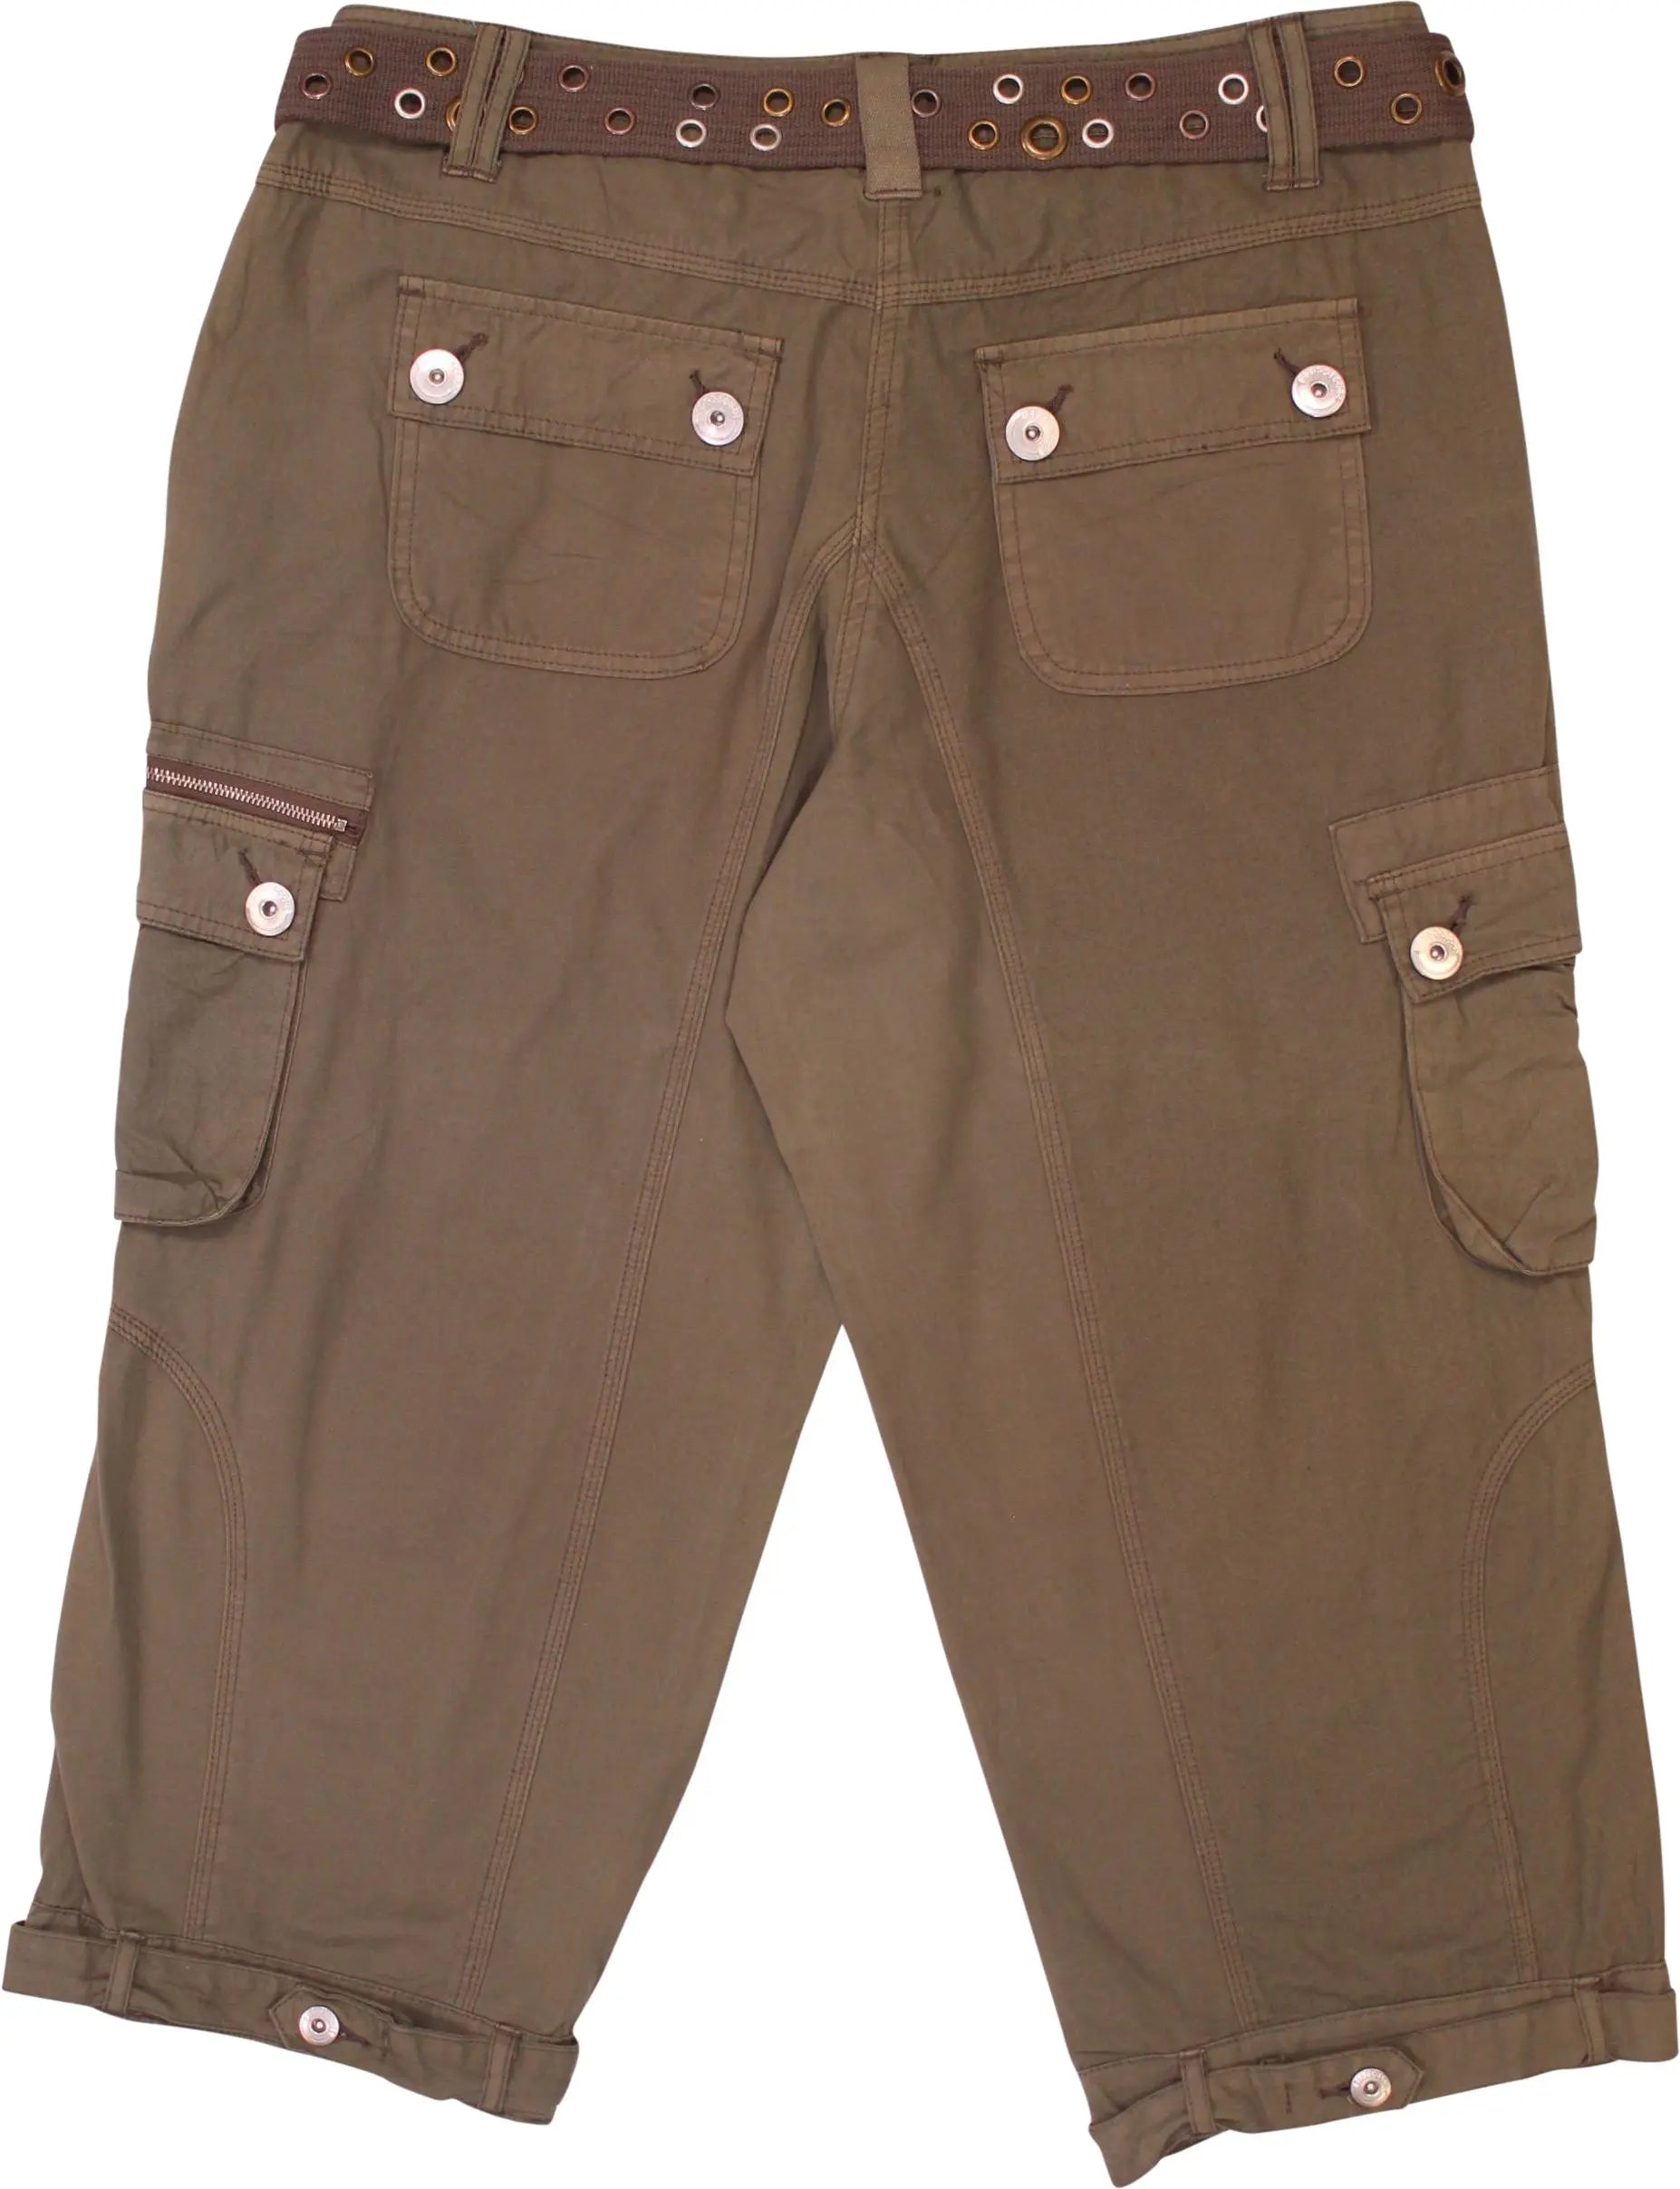 Miss Etam - Cargo Capri Pants- ThriftTale.com - Vintage and second handclothing